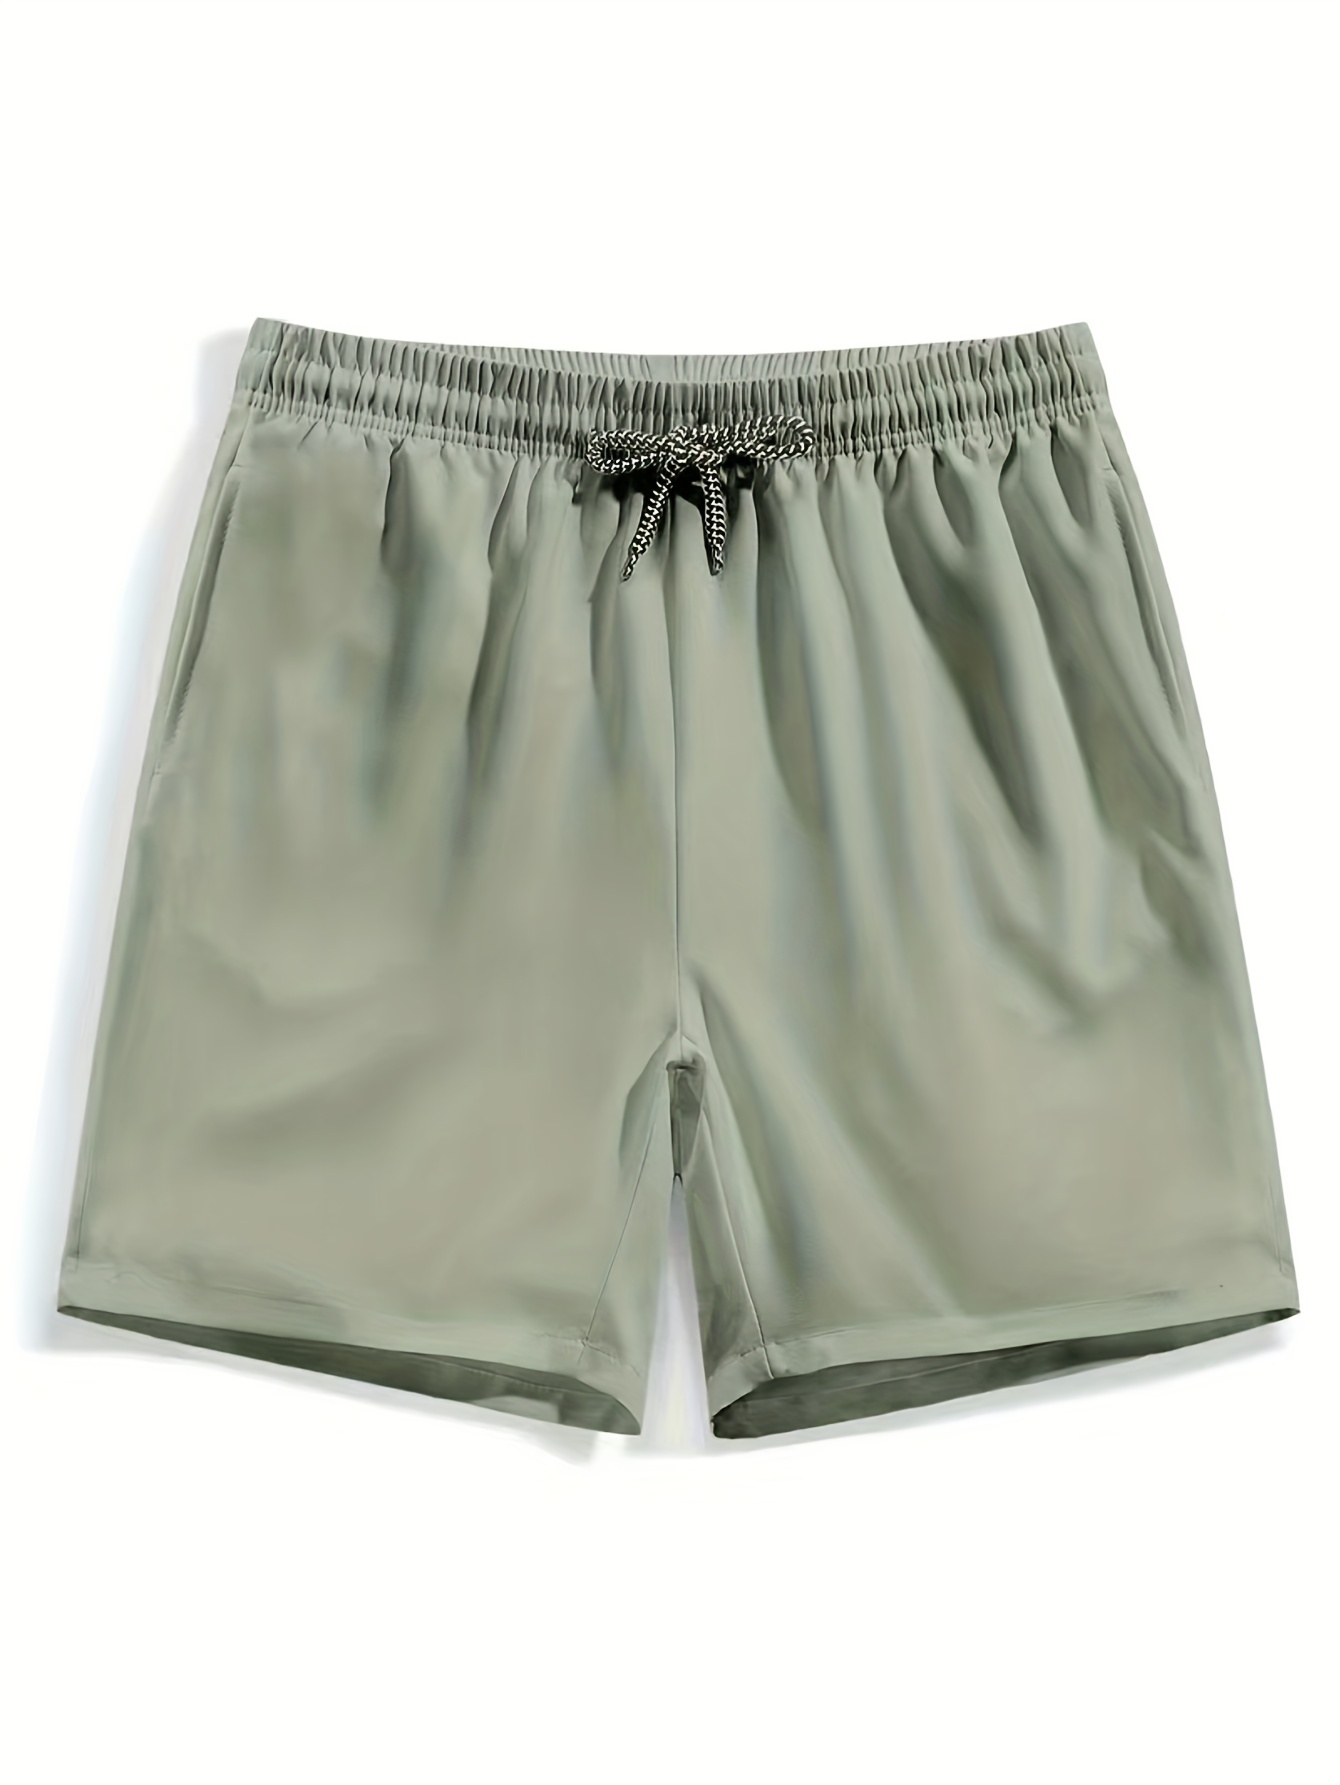 nsendm Pt Shorts Men Mens Summer Solid Color Pants Pocket Drawstring Loose  Quick Mens Workout Shorts 5 Inch Inseam Shorts Khaki Large